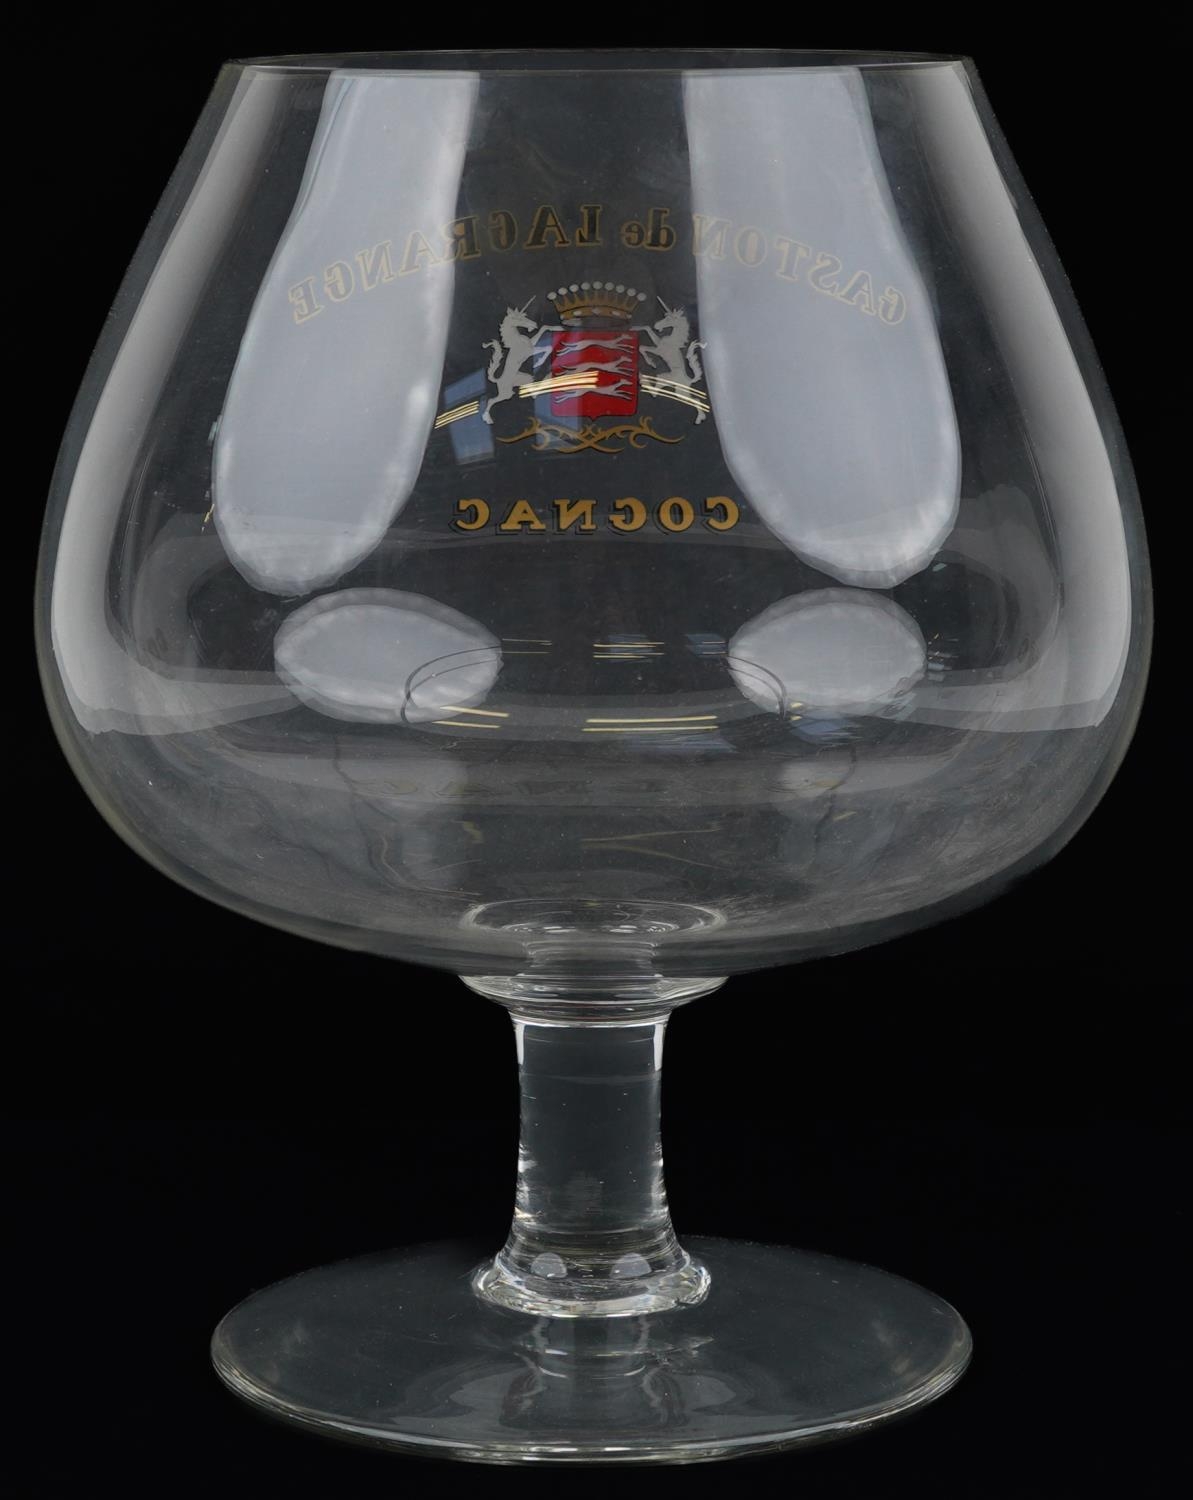 19th/early 20th century oversized cognac glass advertising Gaston de la Grange Cognac, 30cm high - Image 2 of 3